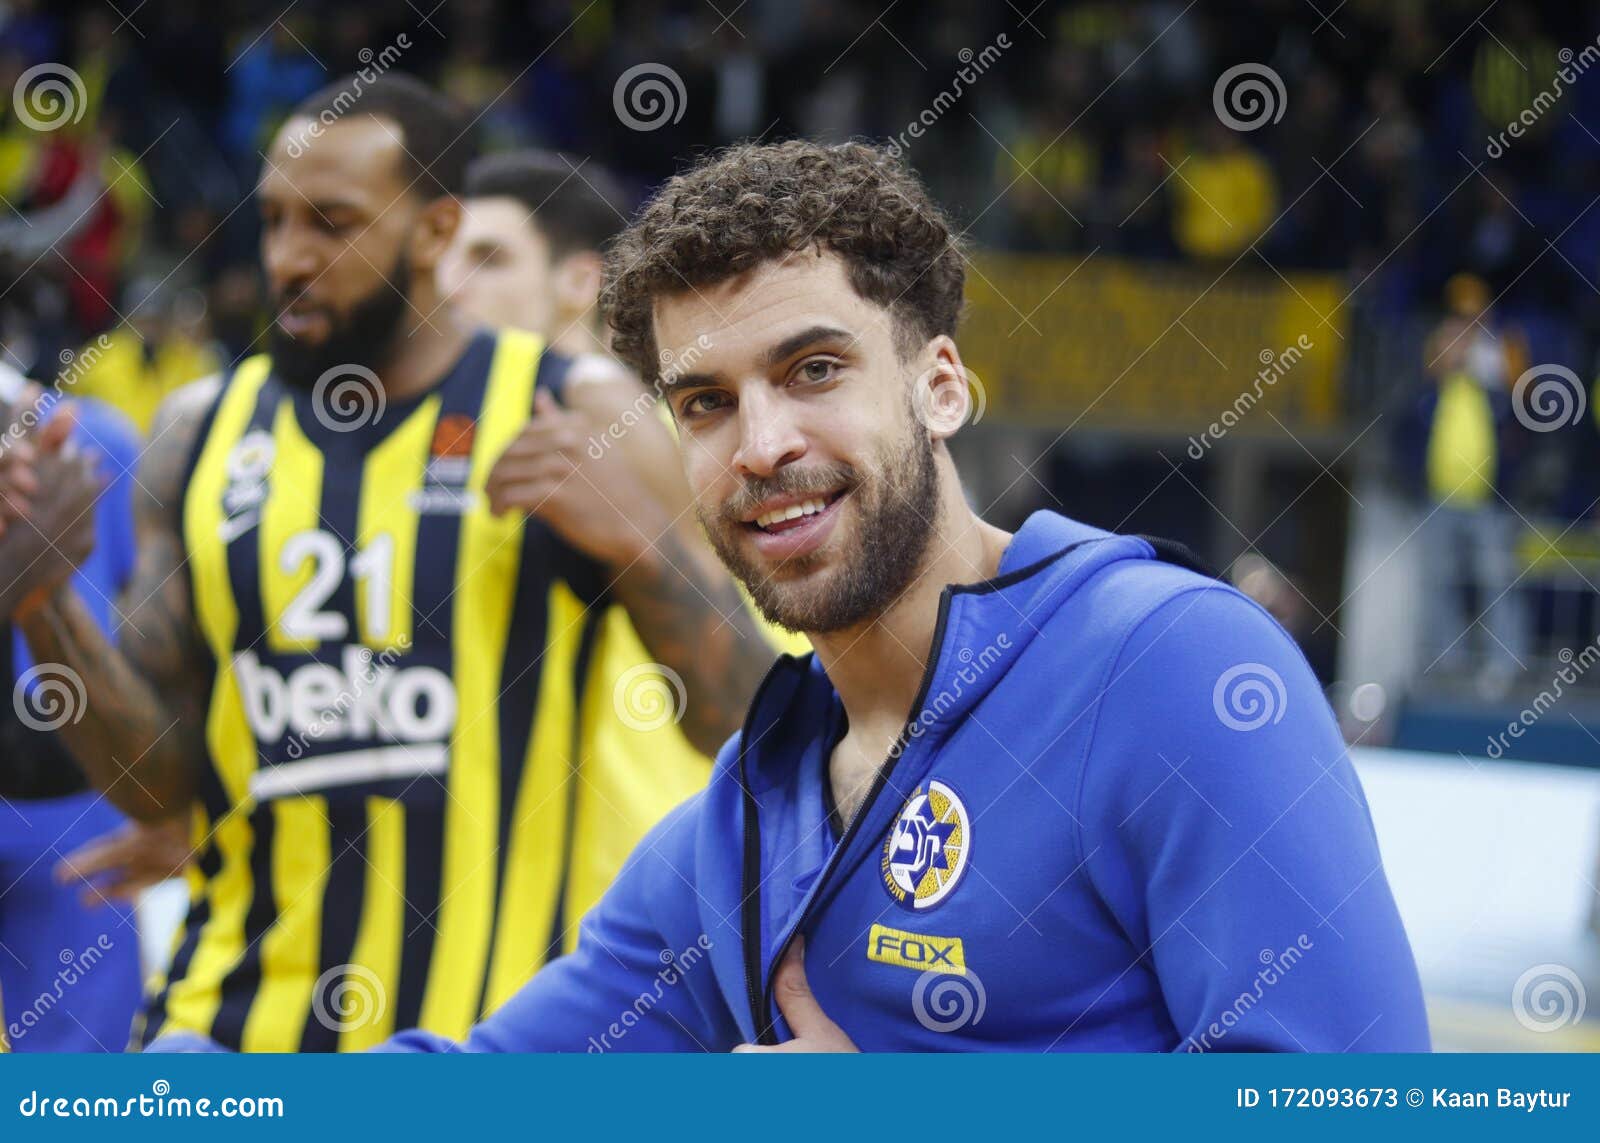 FenerbahÃ§e - Maccabi Tel Aviv / 2019-2020 EuroLeague Round 24 Game  Editorial Stock Photo - Image of basketball, event: 172094358